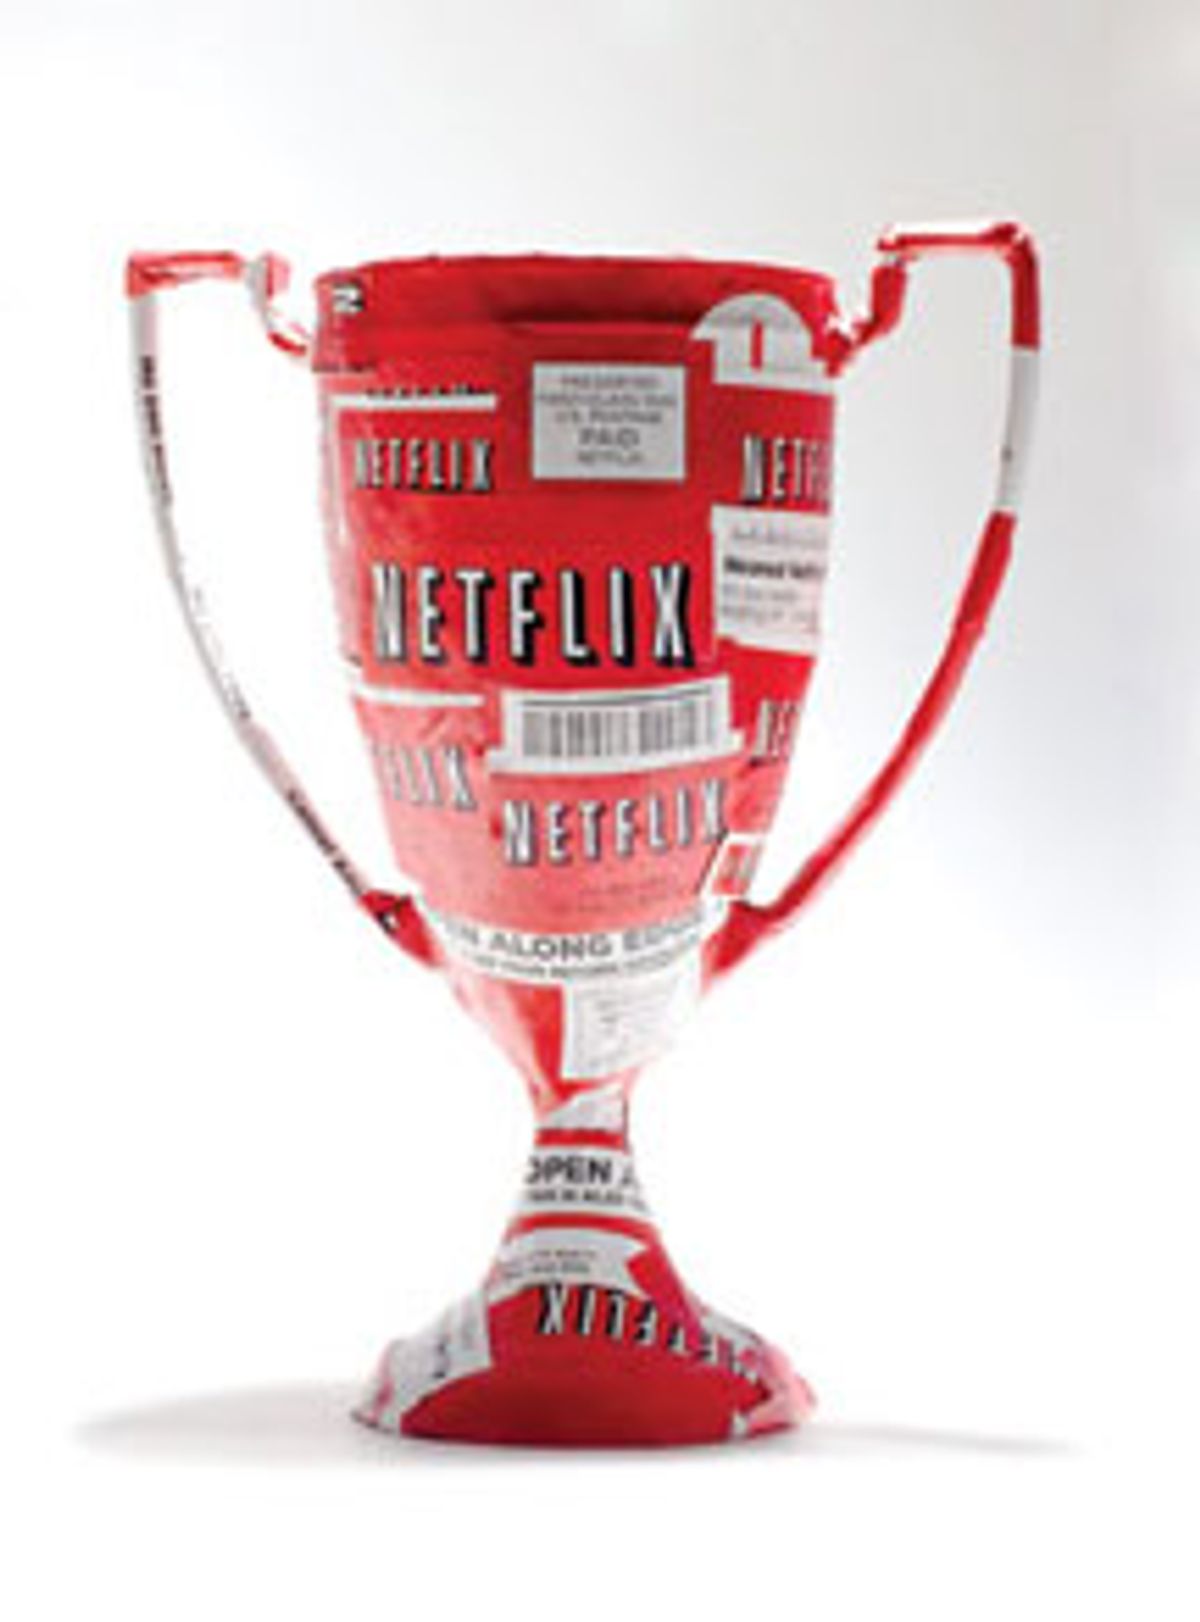 Million Dollar Netflix Prize Won